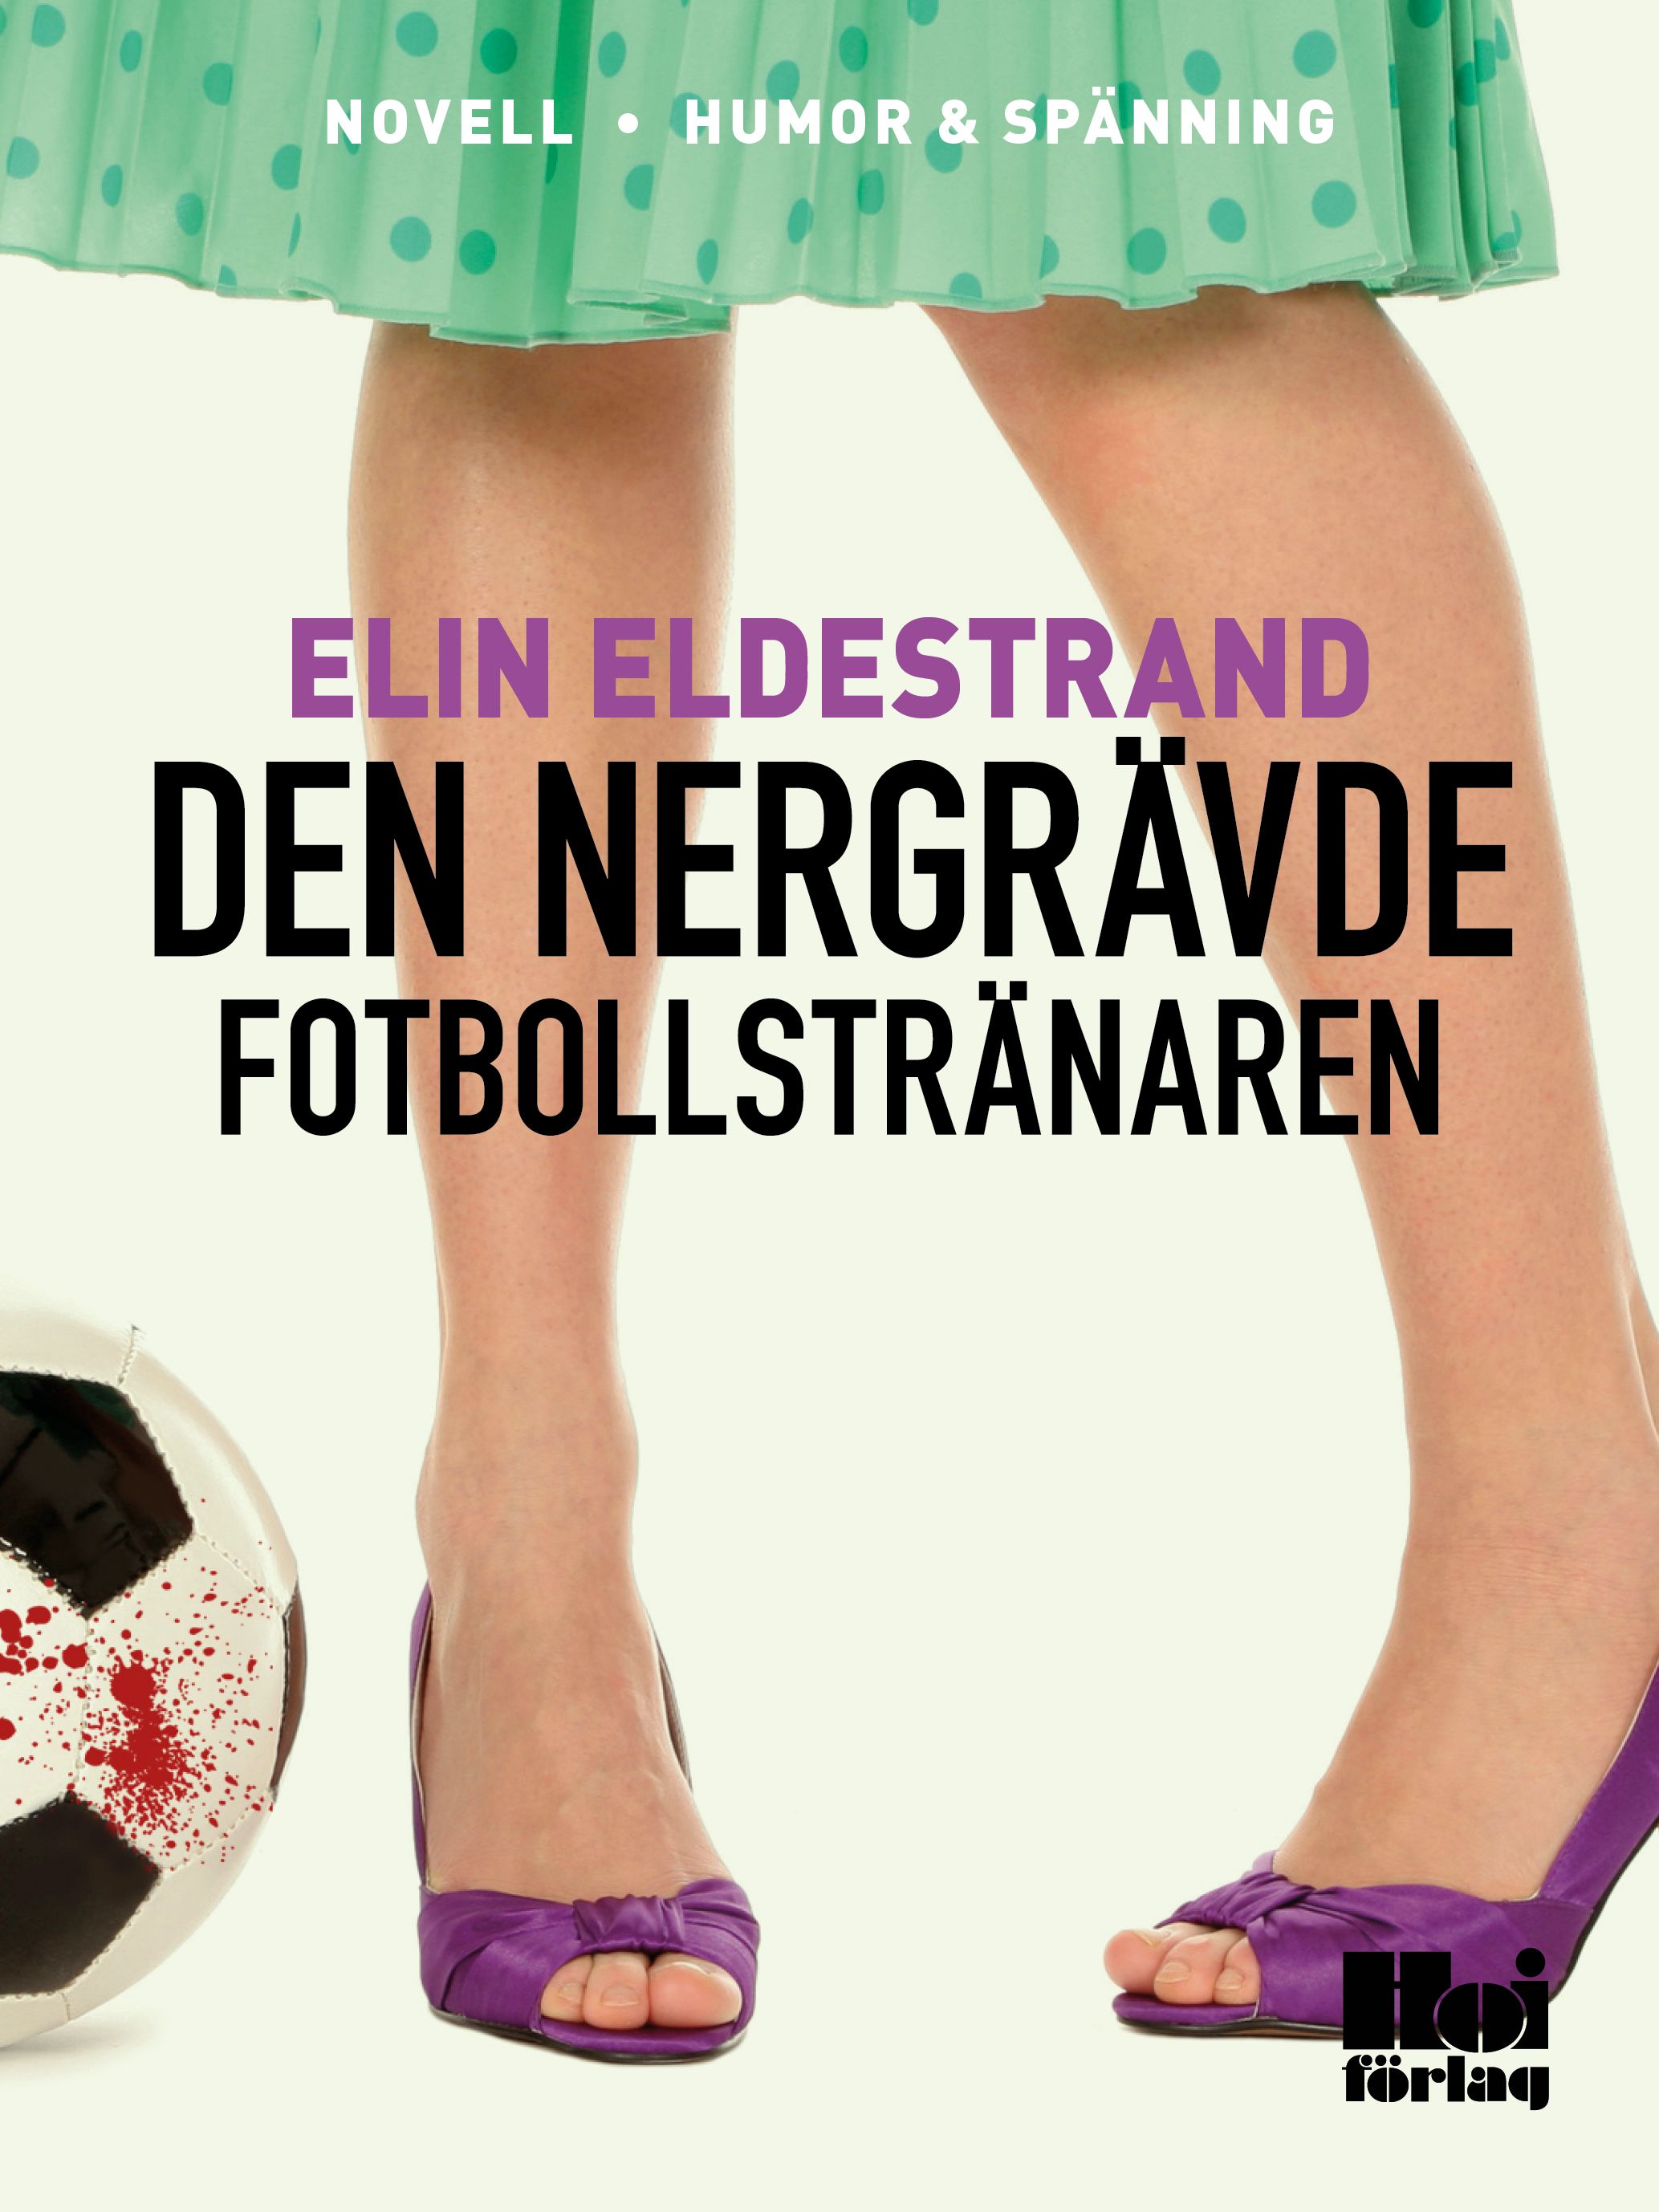 Den nergrävde fotbollstränaren, e-bog af Elin Eldestrand